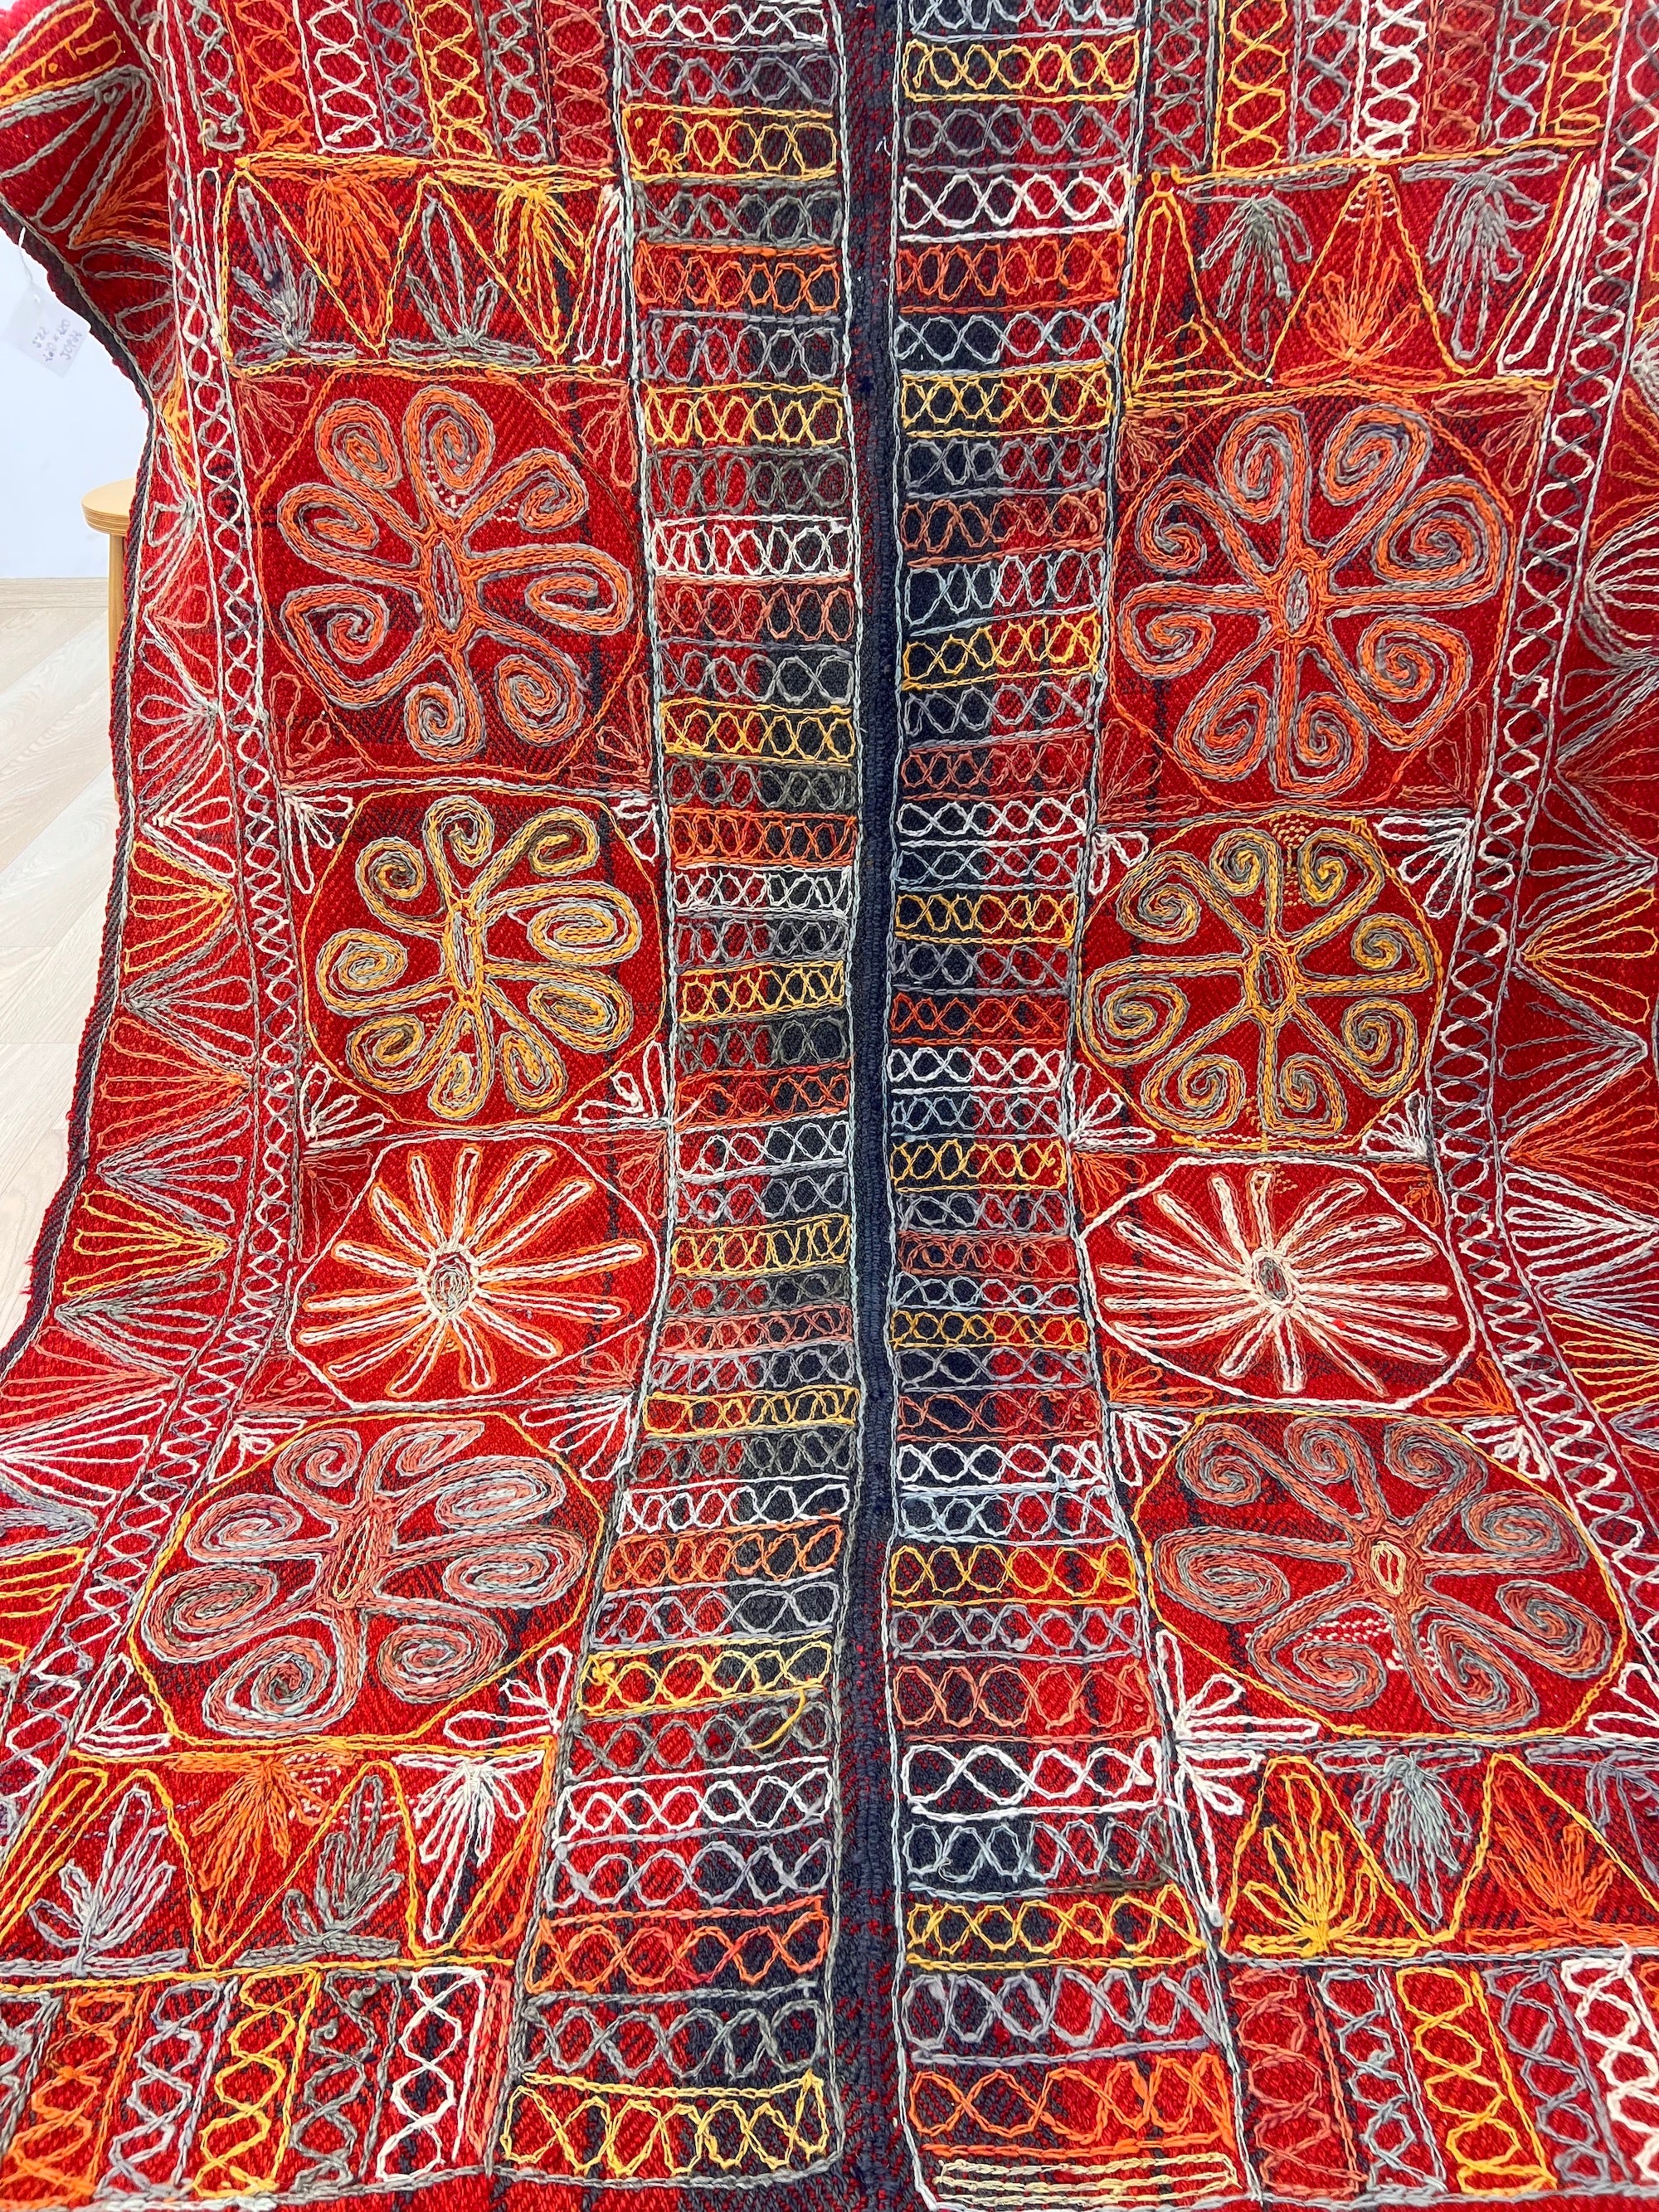 Allix - Multi Color Turkish Kilim Rug - kudenrugs